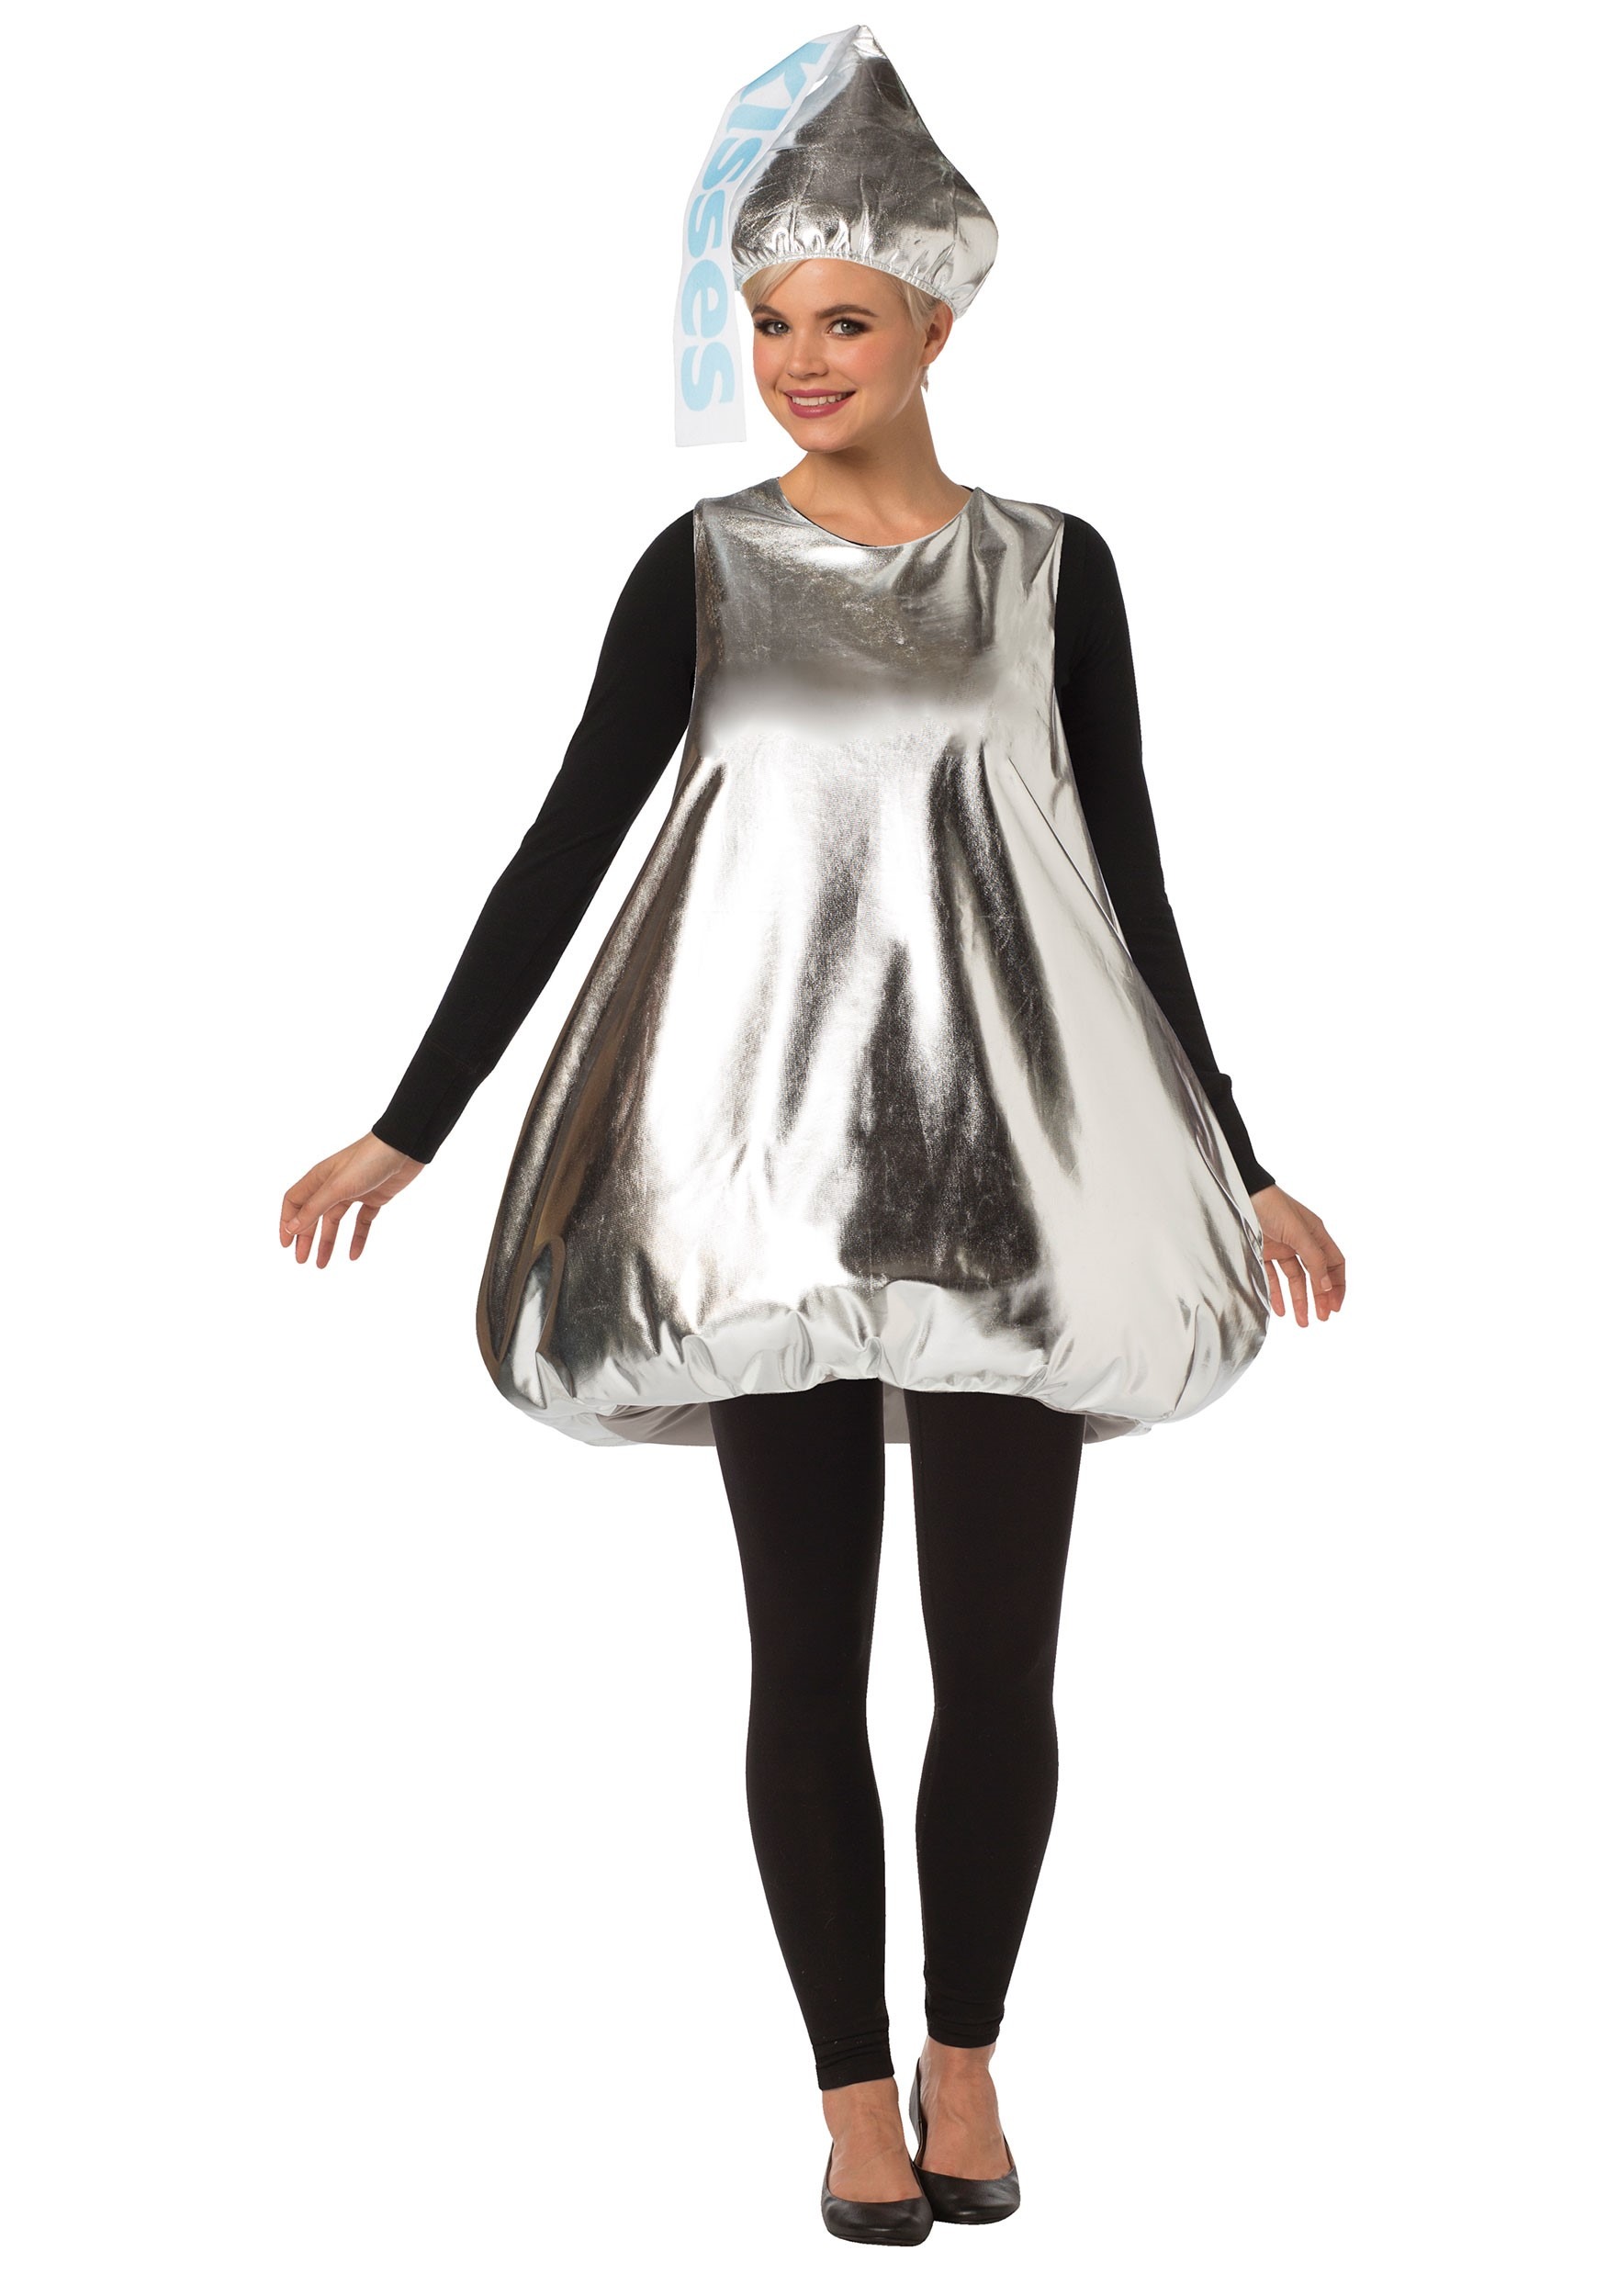 Hersheys Hersheys Kiss Costume for Adults